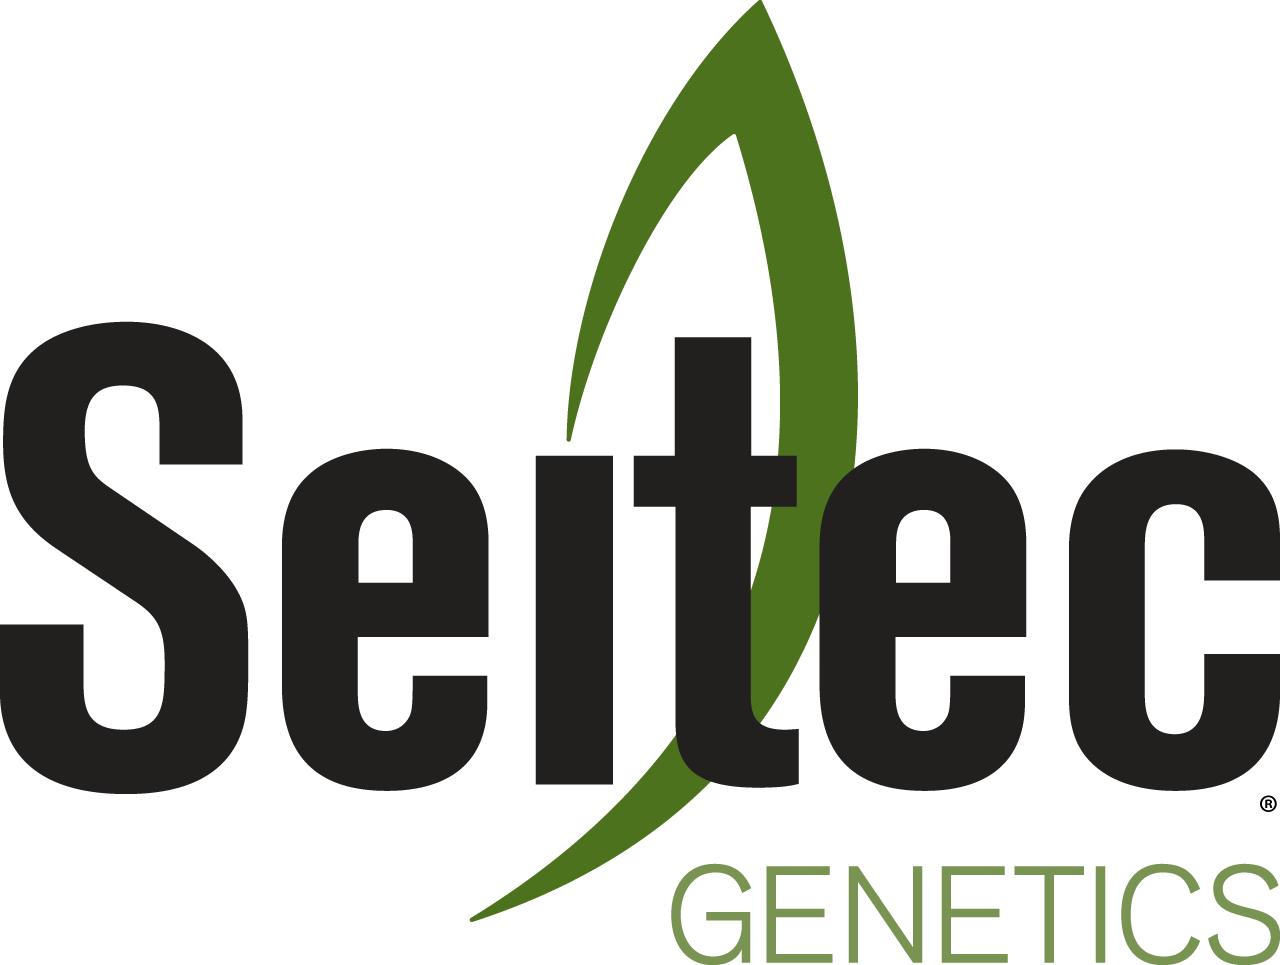 Seitec Genetics